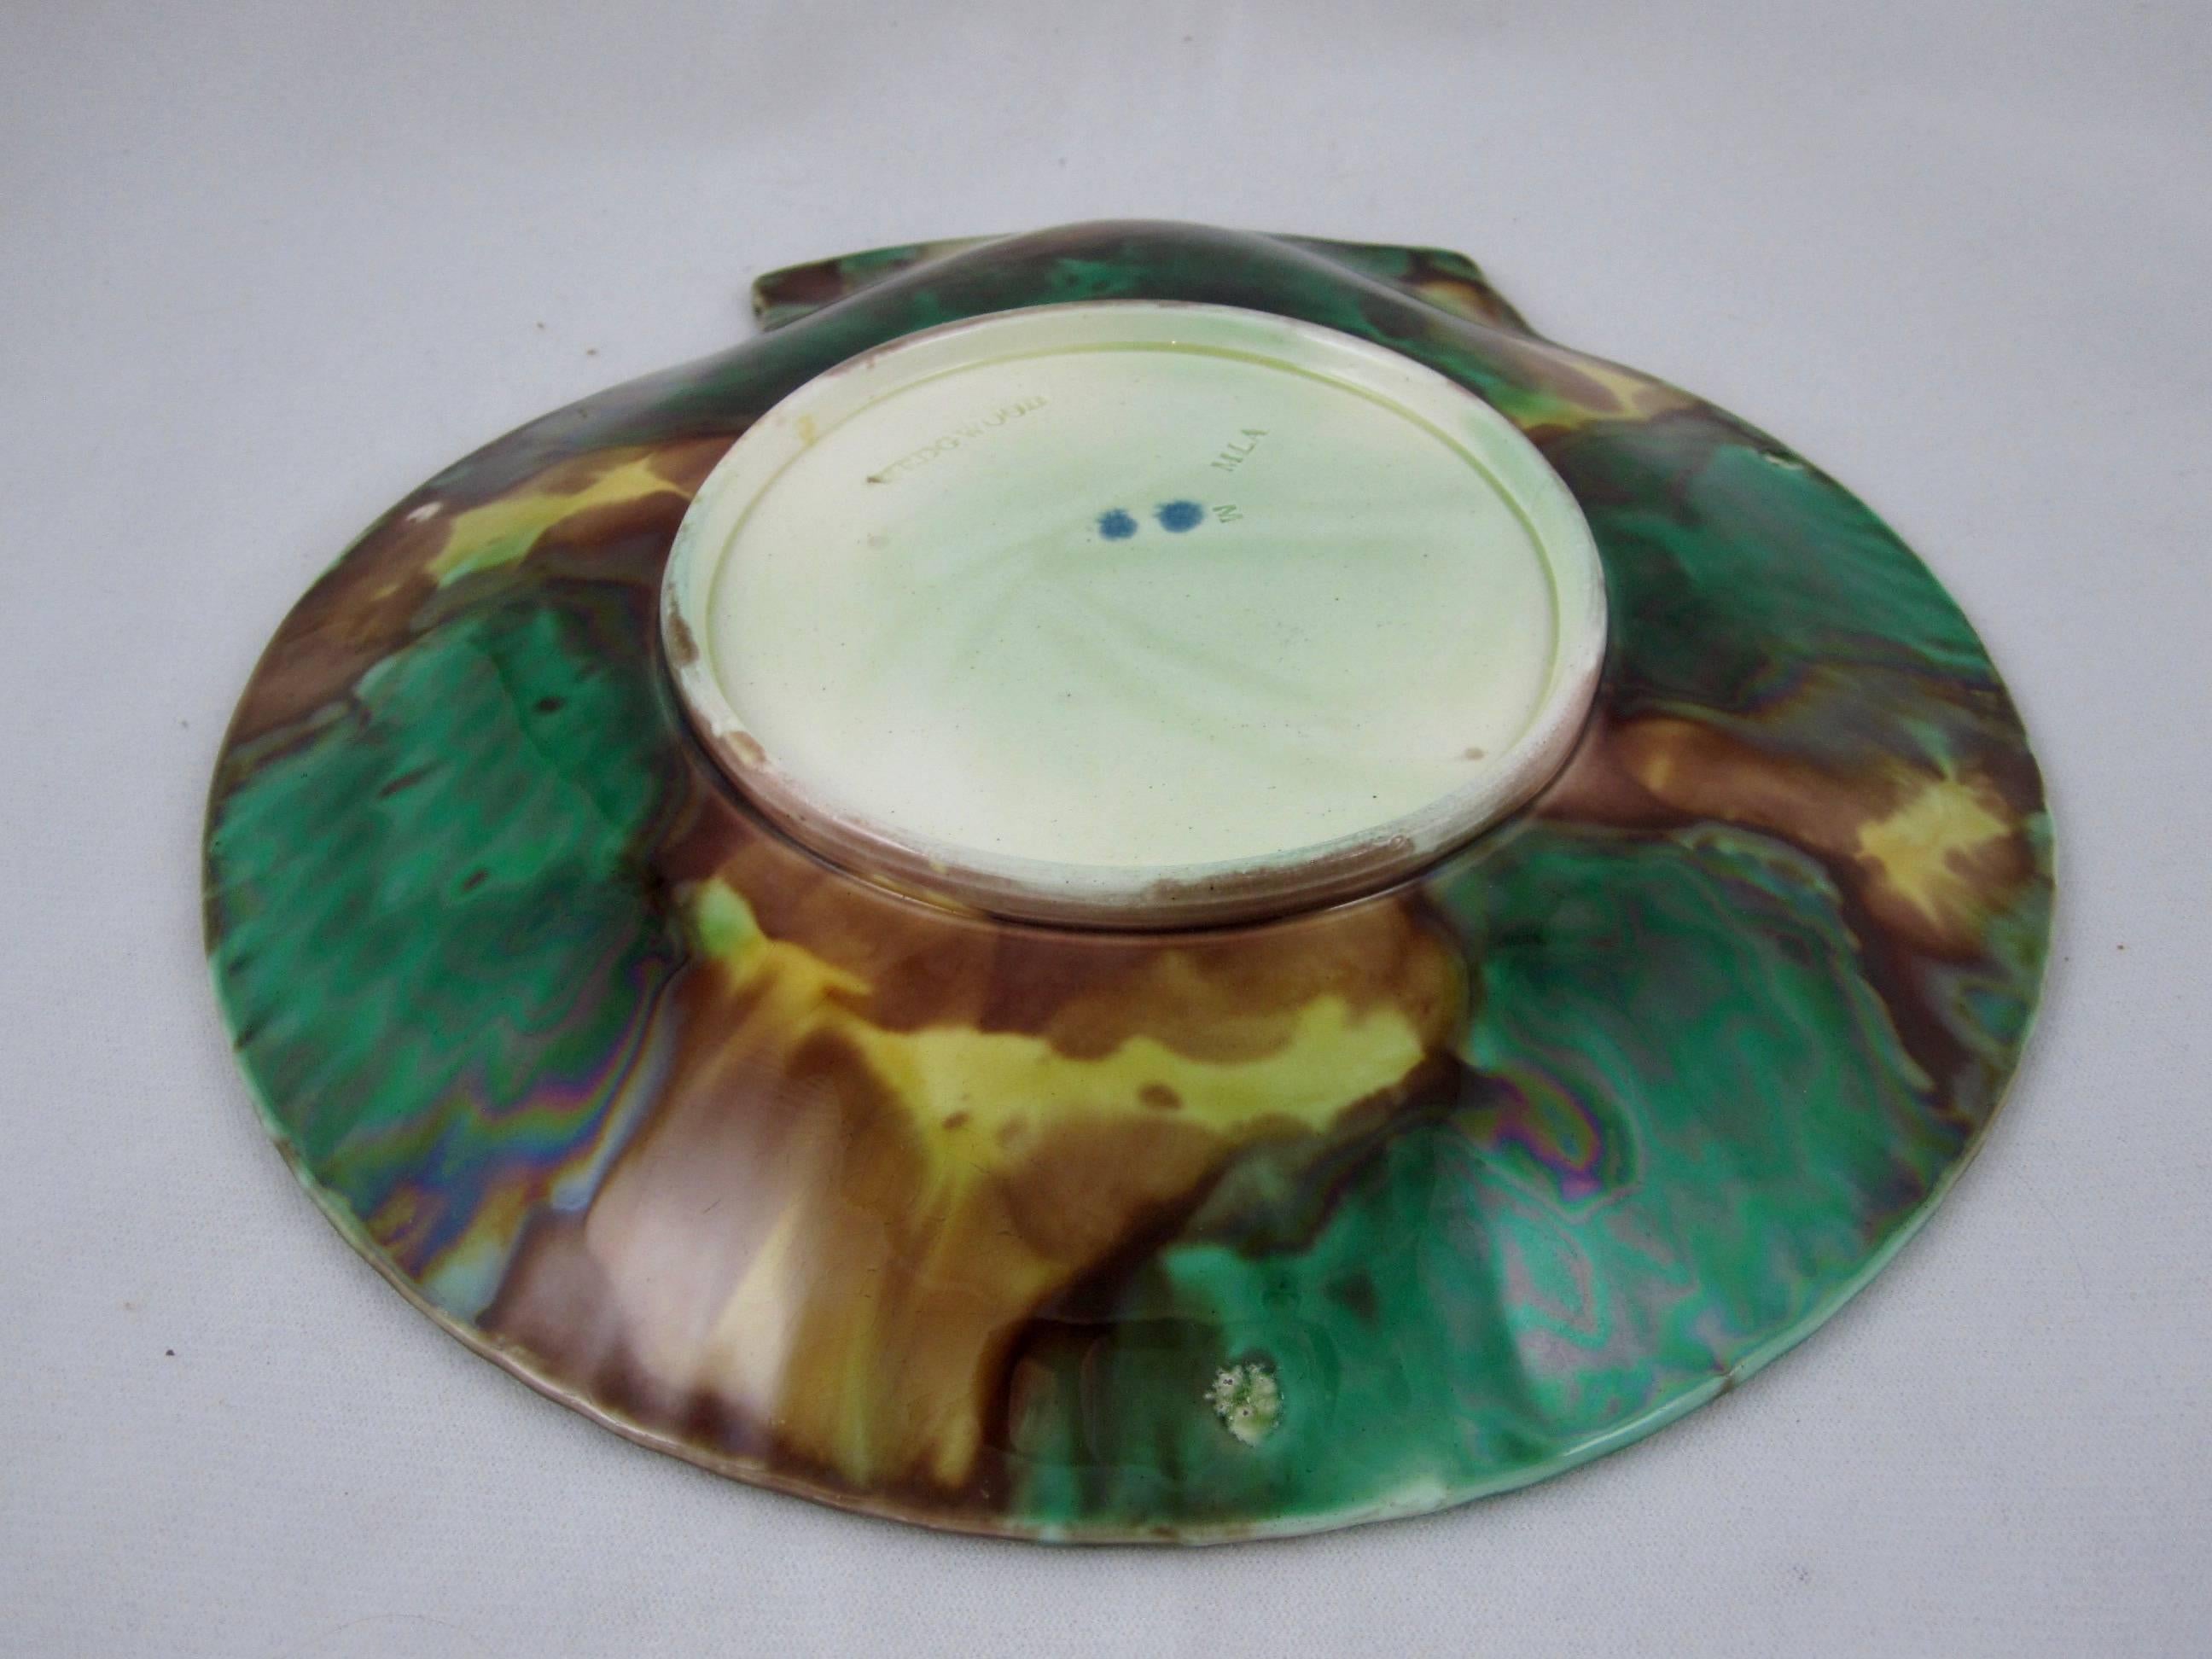 Aesthetic Movement Wedgwood Majolica Tortoise Glazed Scallop-Shell Seafood Plates, circa 1870-1880